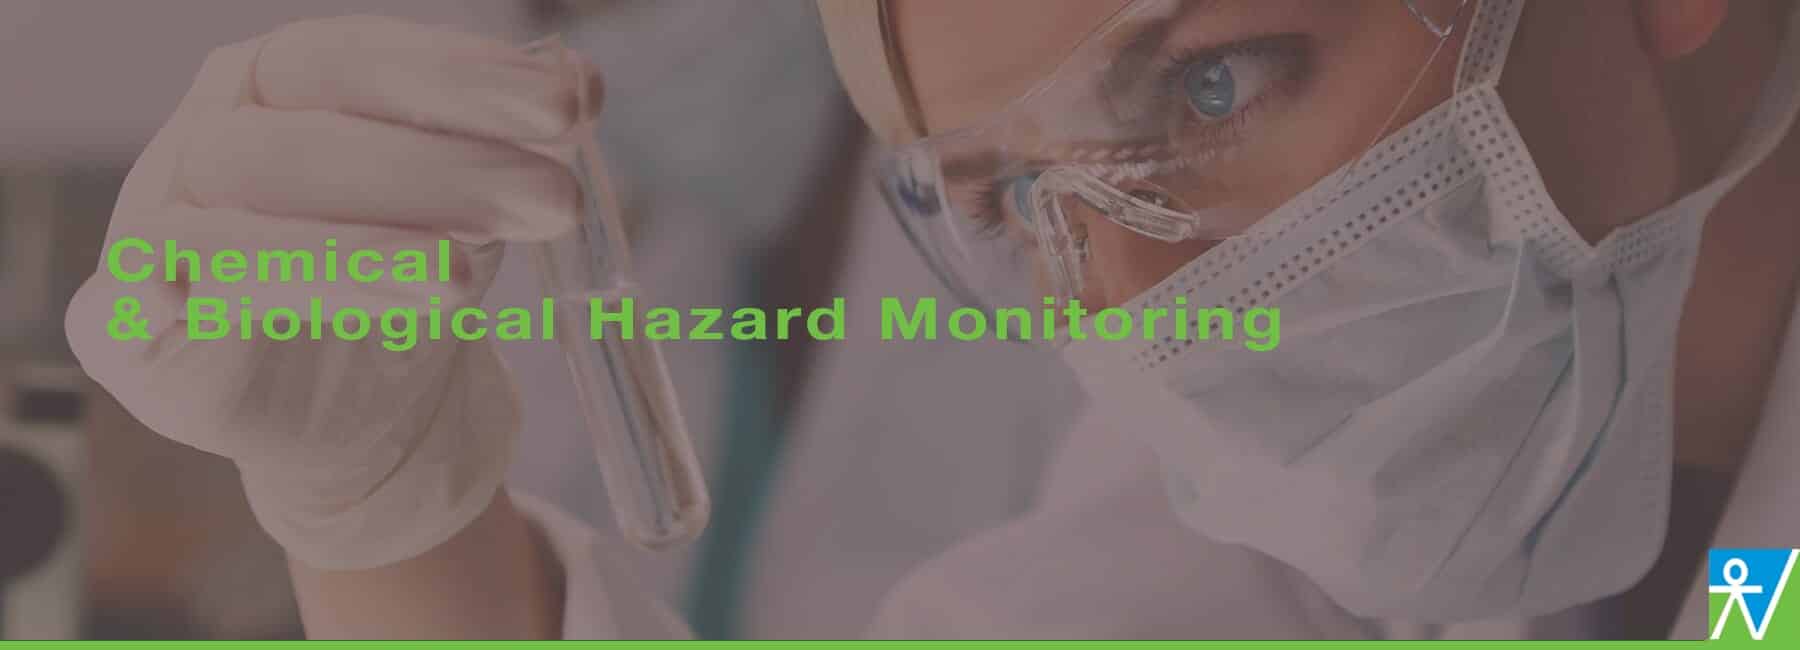 Chemical &  biological hazard monitoring at work